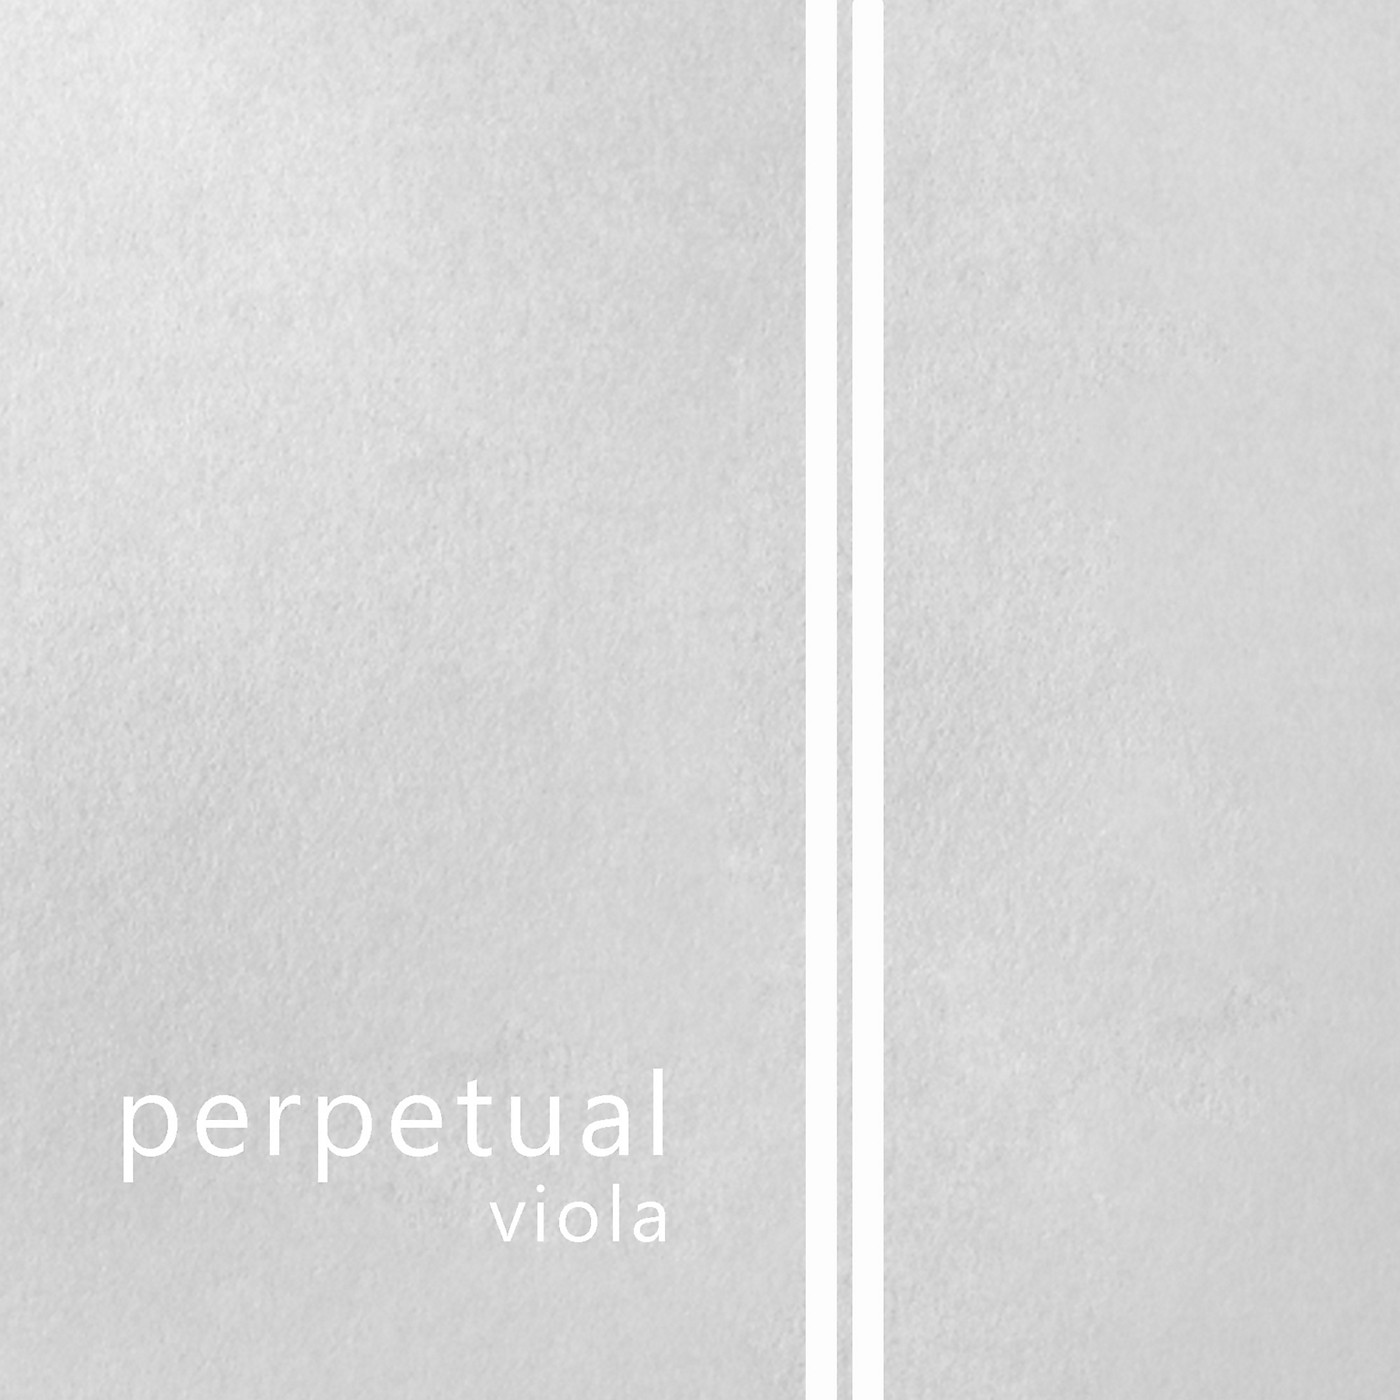 Pirastro Perpetual Series Viola D String thumbnail